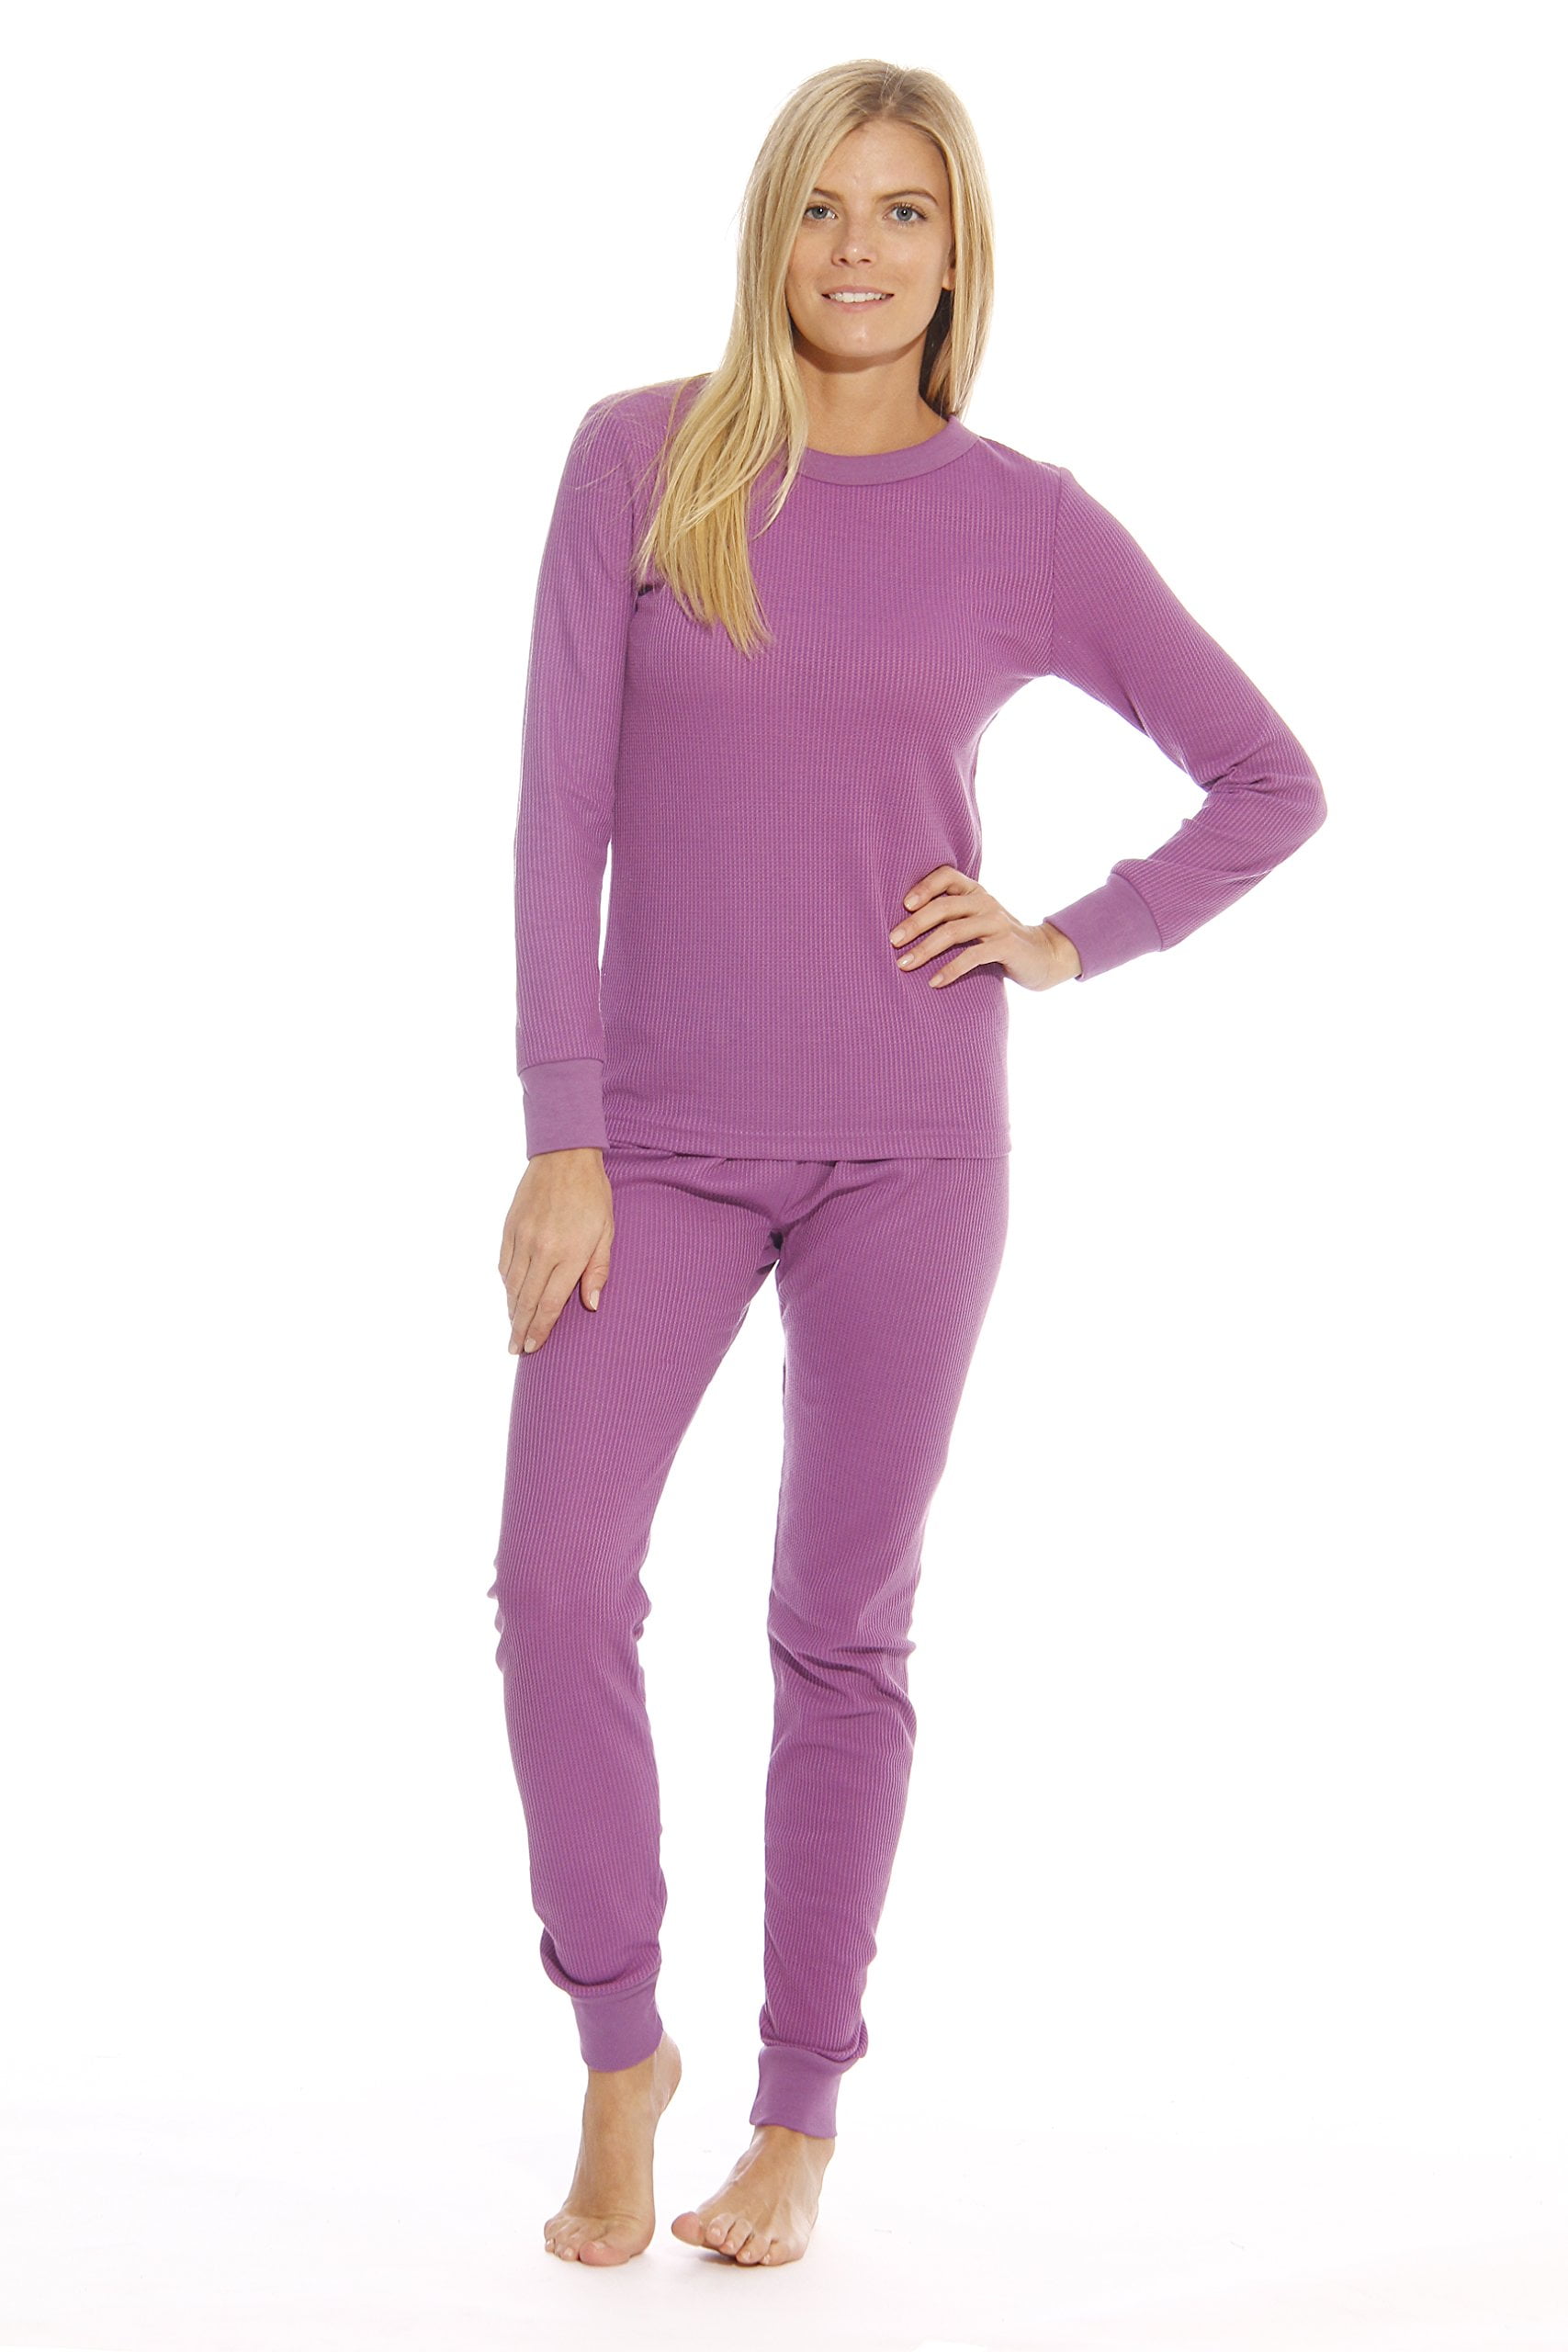 Just Love Women's Thermal Underwear Pajamas Set (Purple, Small) 